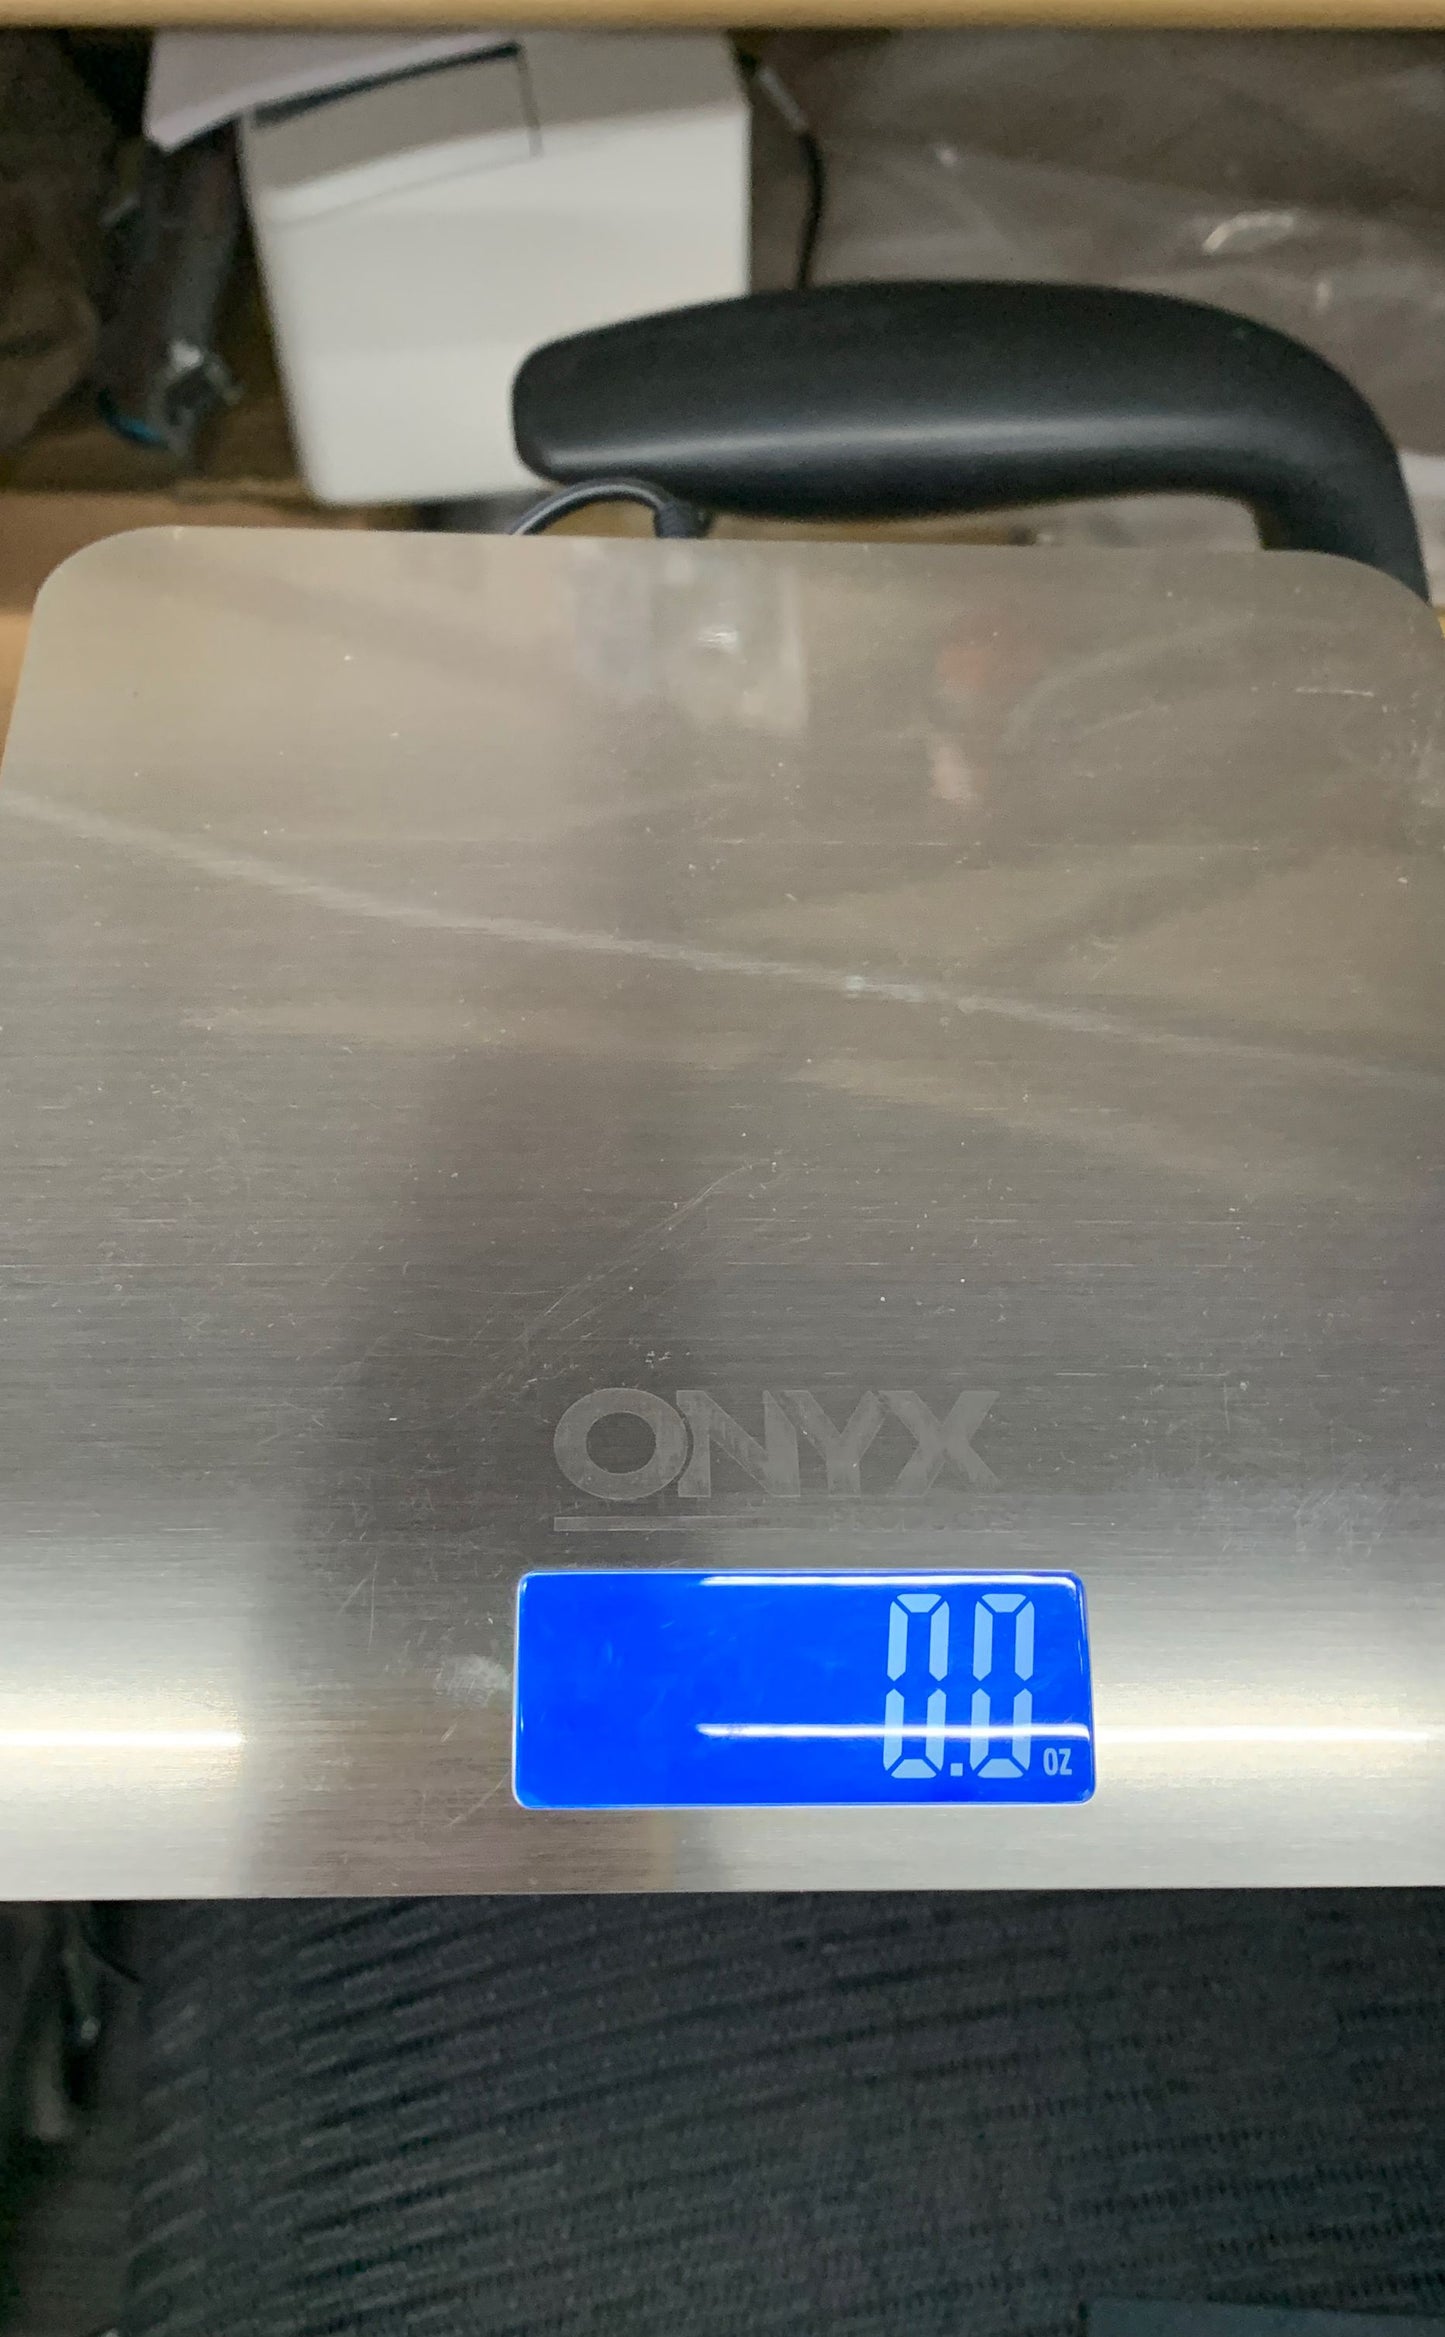 Onyx Stainless Steel 5 lb Digital Postal Scale